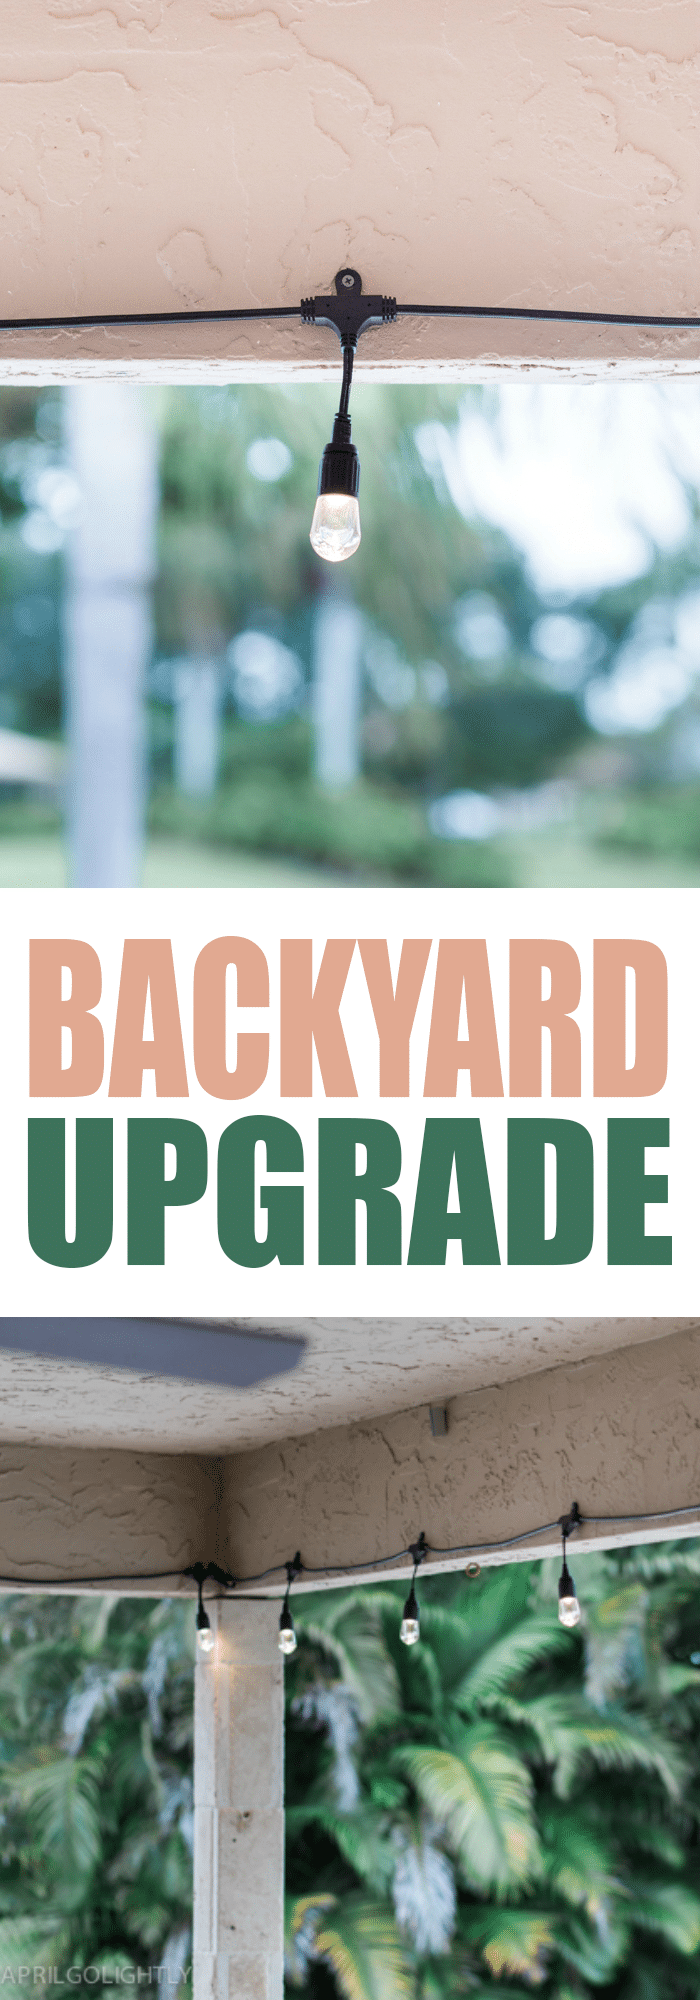 Backyard-Upgrade-with-Cafe-Lights